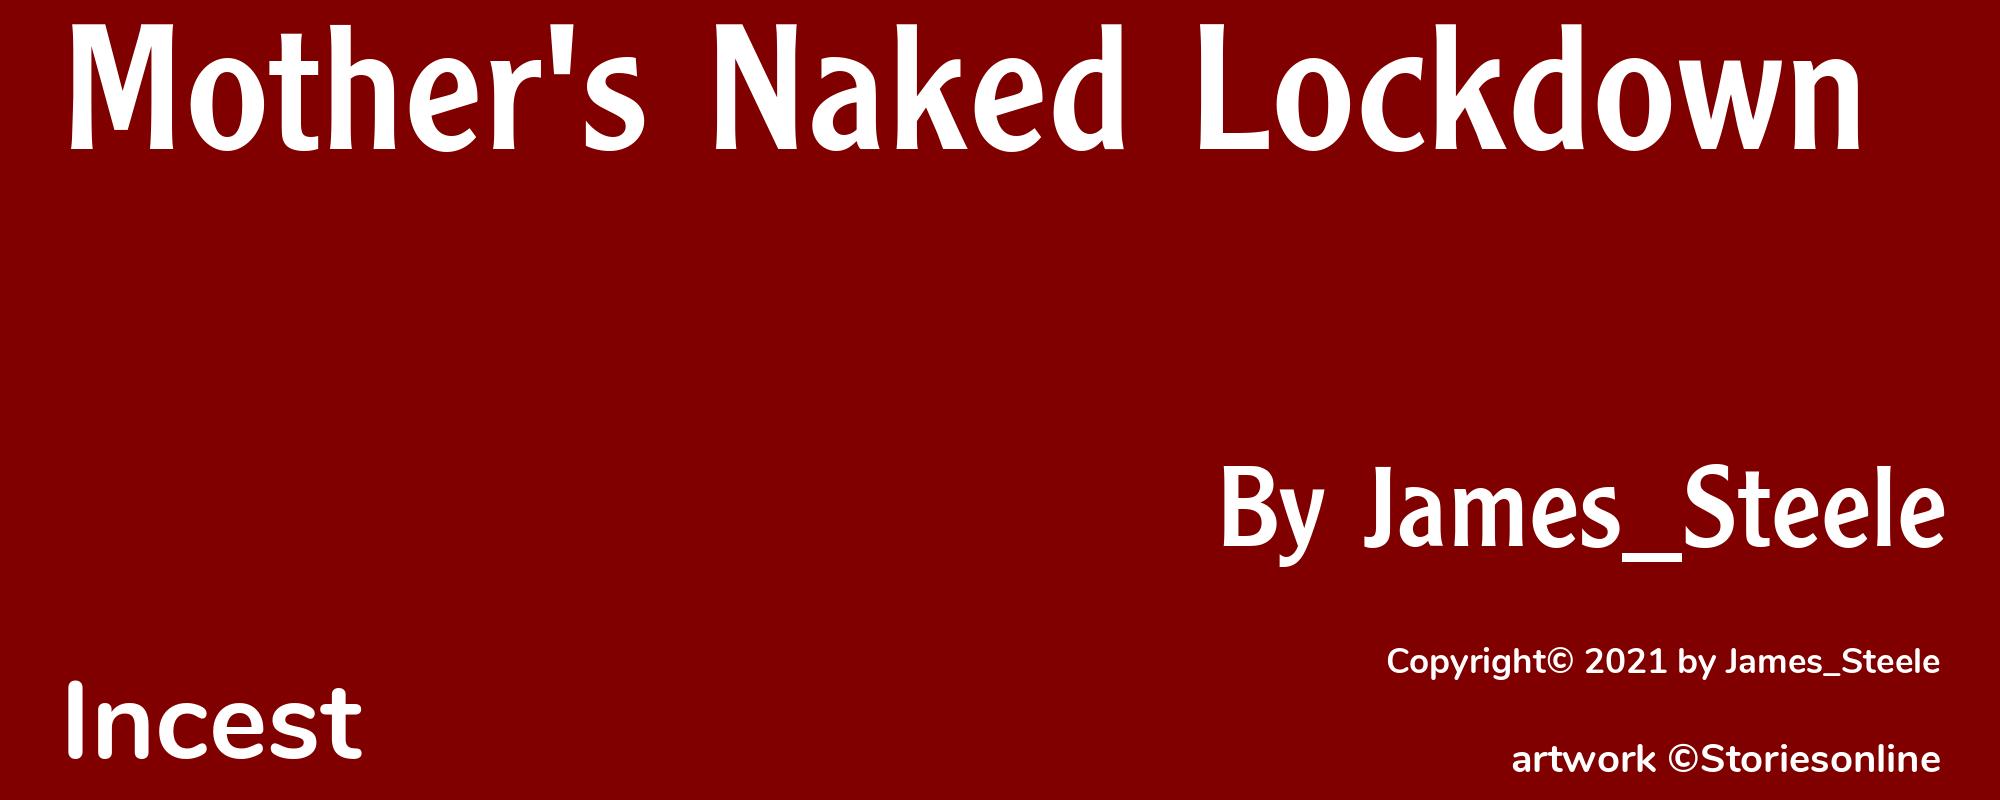 Mother's Naked Lockdown - Cover